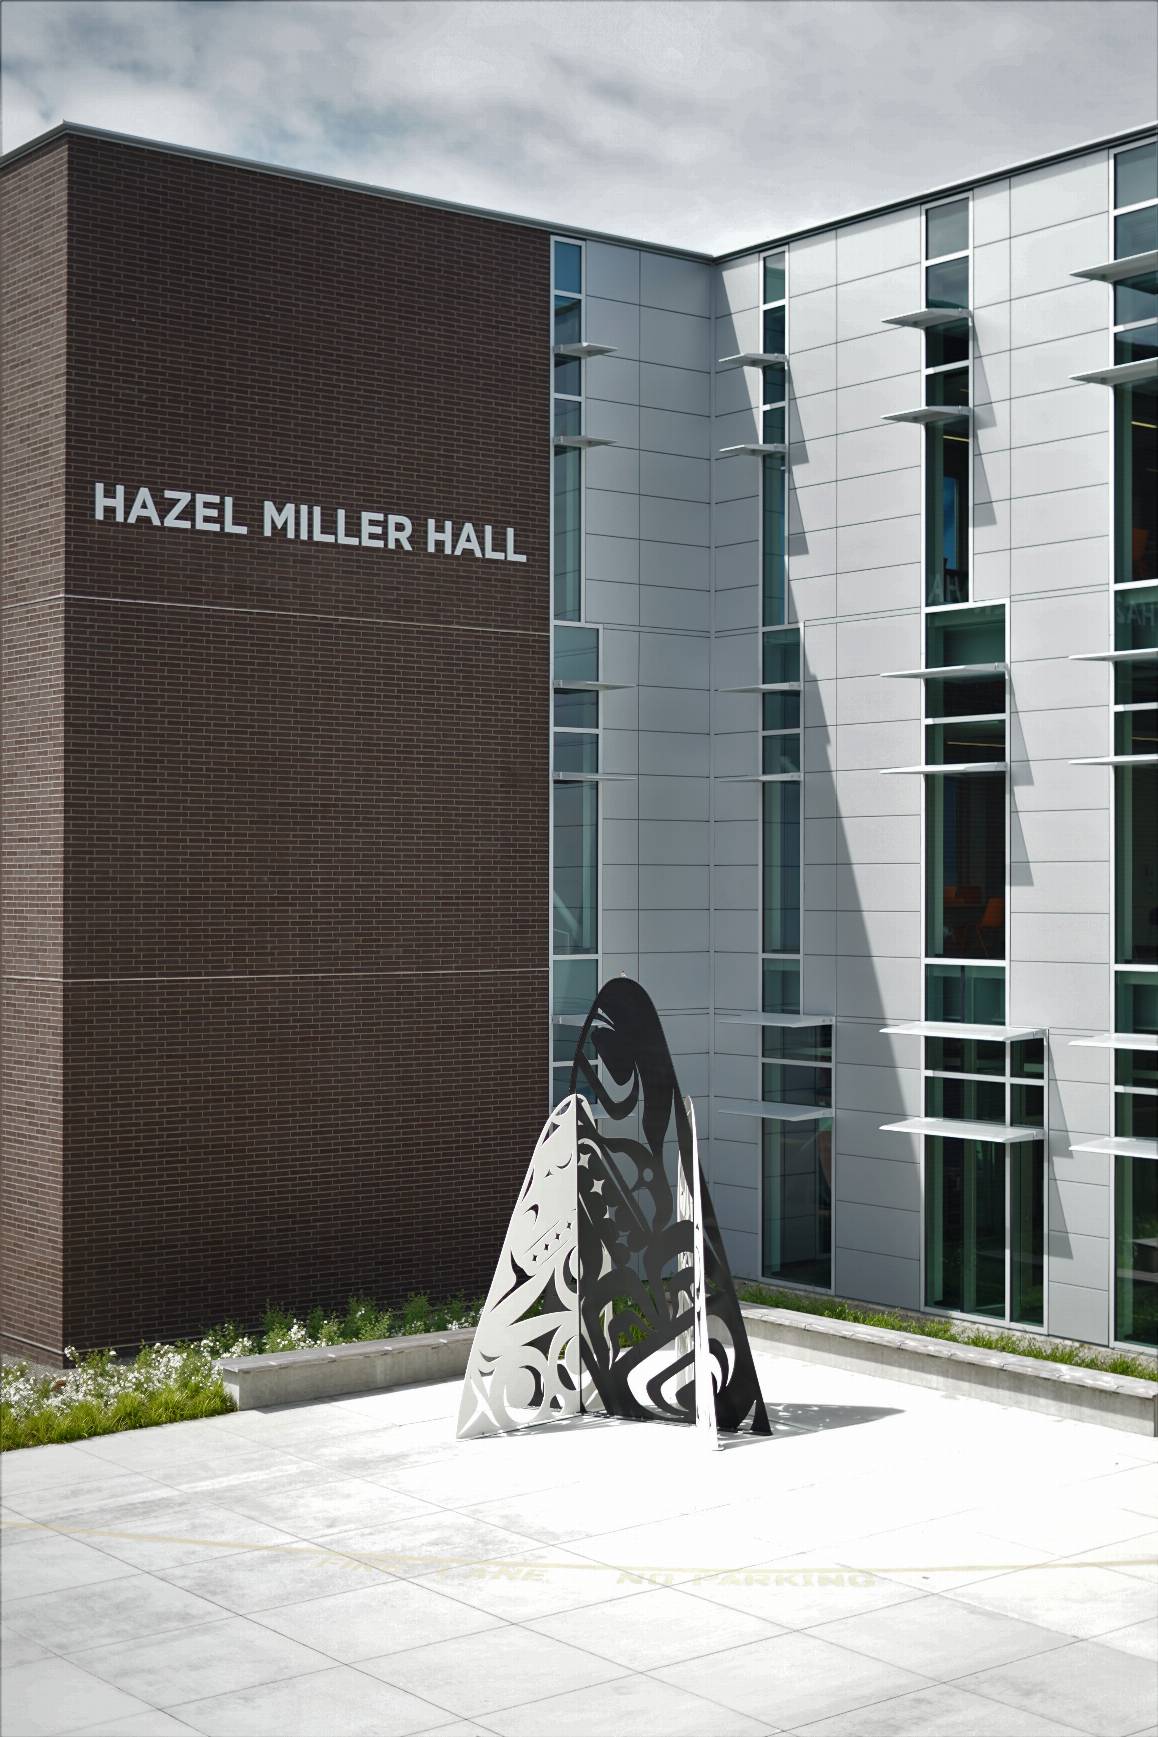 Photograph of sculpture outside Hazel Miller Hall.